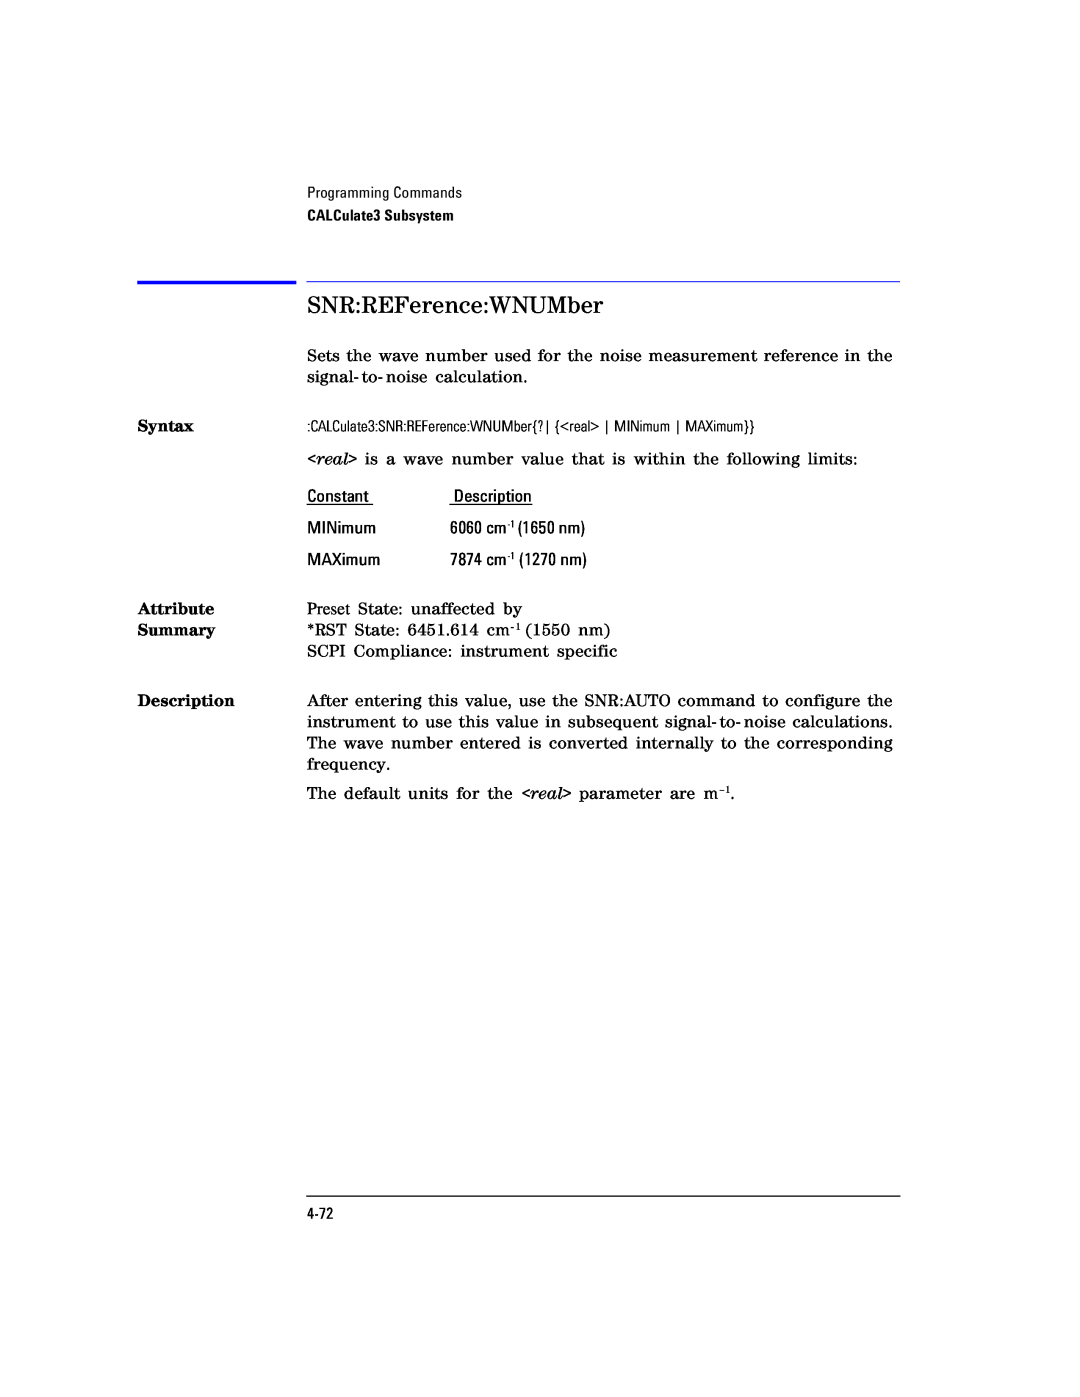 Agilent Technologies Agilent 86120C manual SNRREFerenceWNUMber, Syntax, Attribute, Summary, Description 